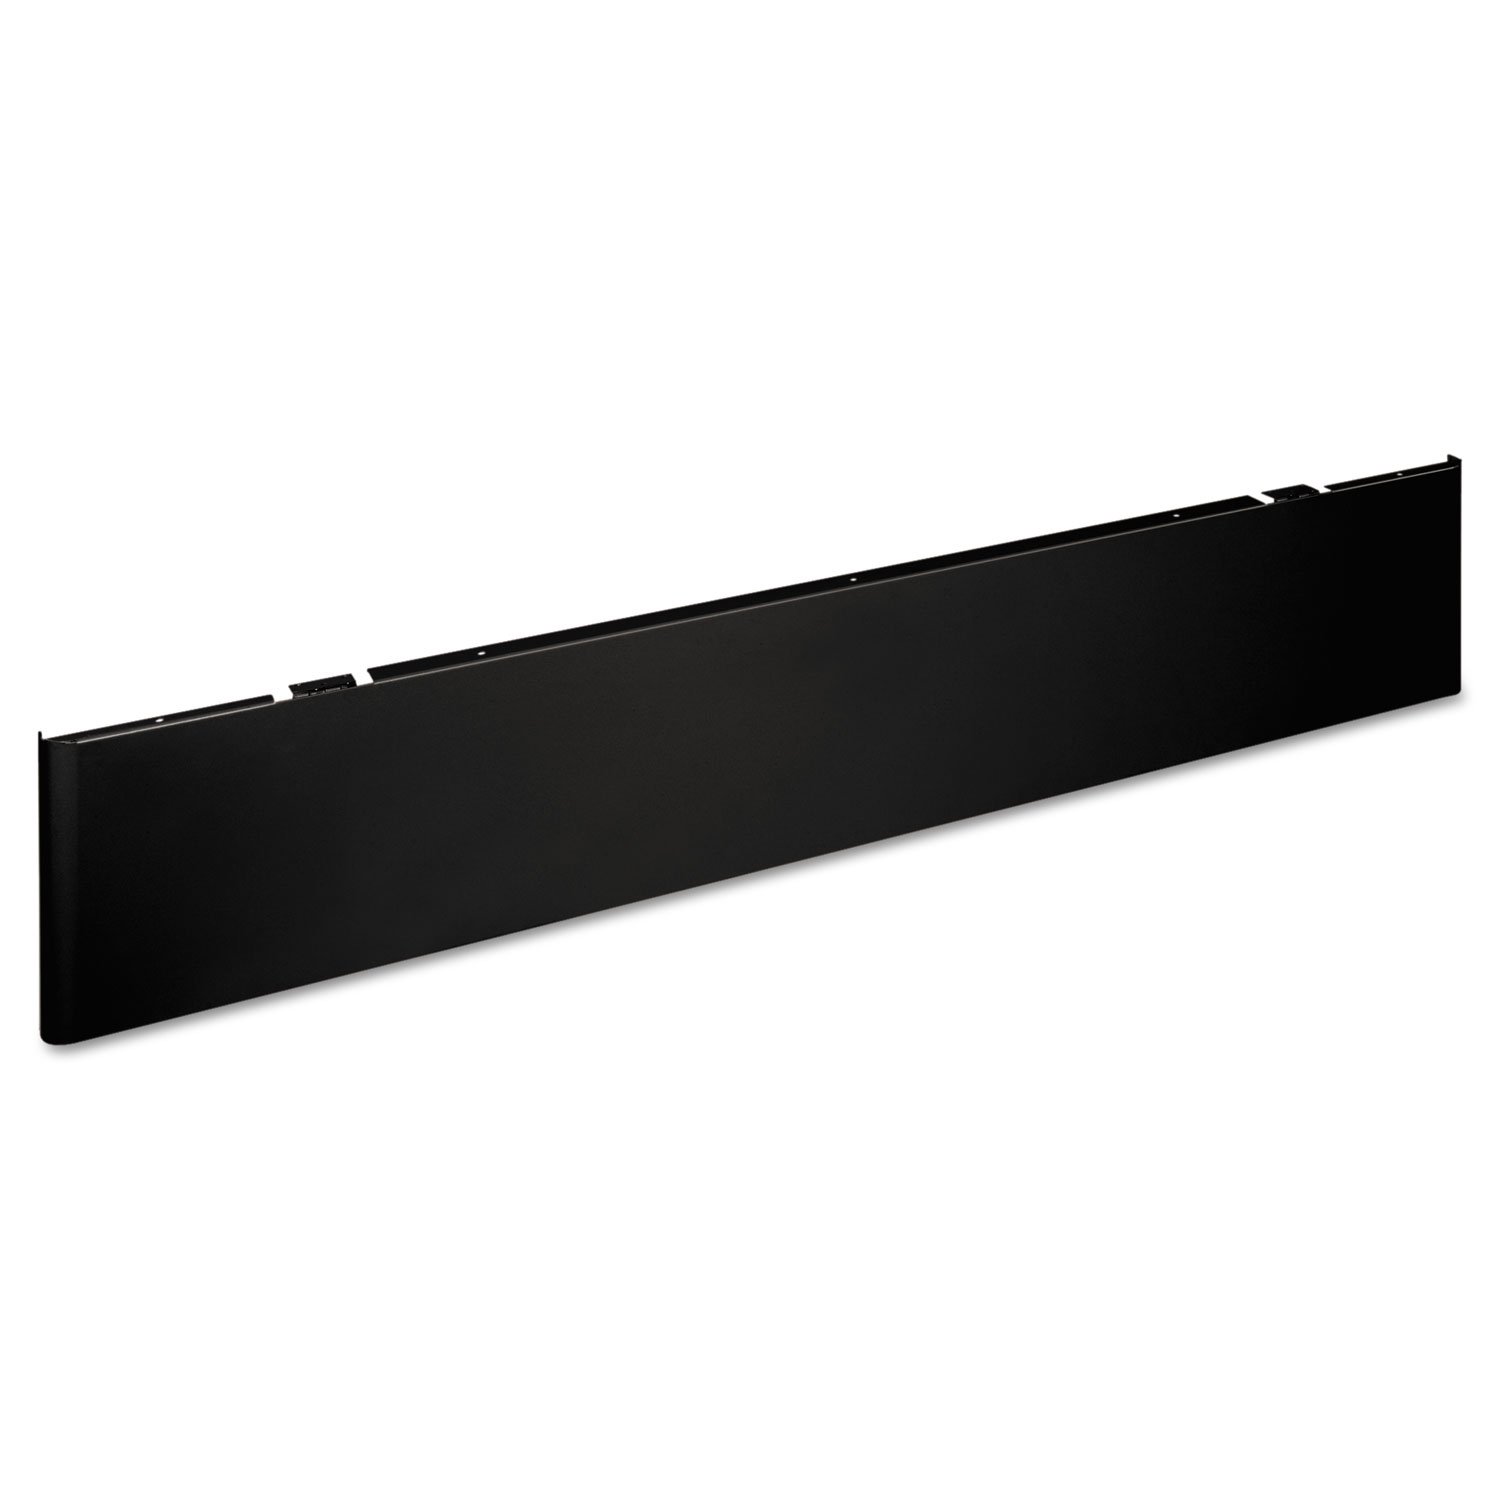 Huddle Series Multipurpose Table Modesty Panel, 66w x 1 3/8d x 9 1/2h, Black